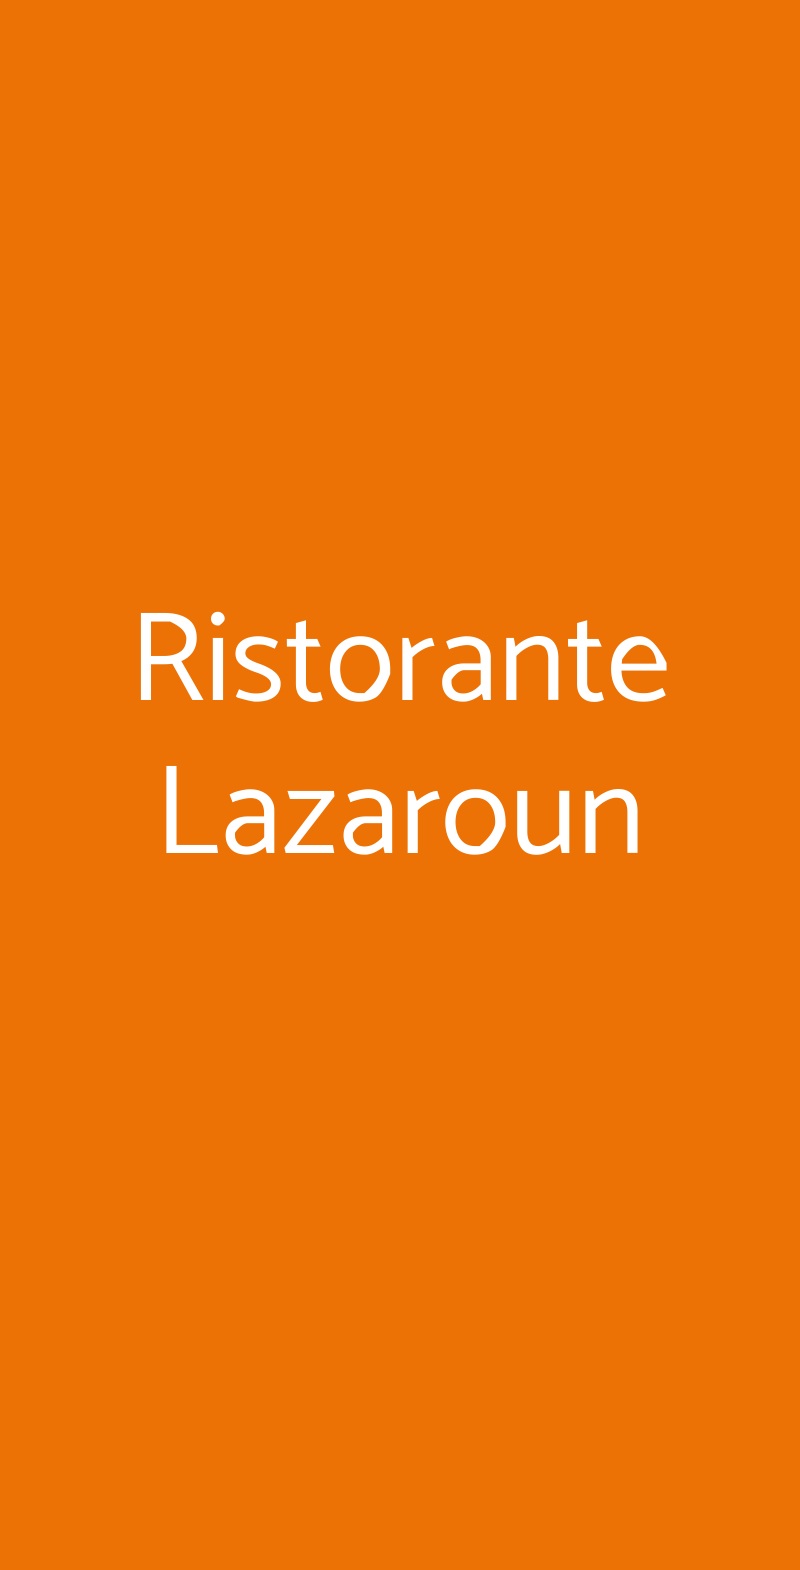 Ristorante Lazaroun Santarcangelo di Romagna menù 1 pagina